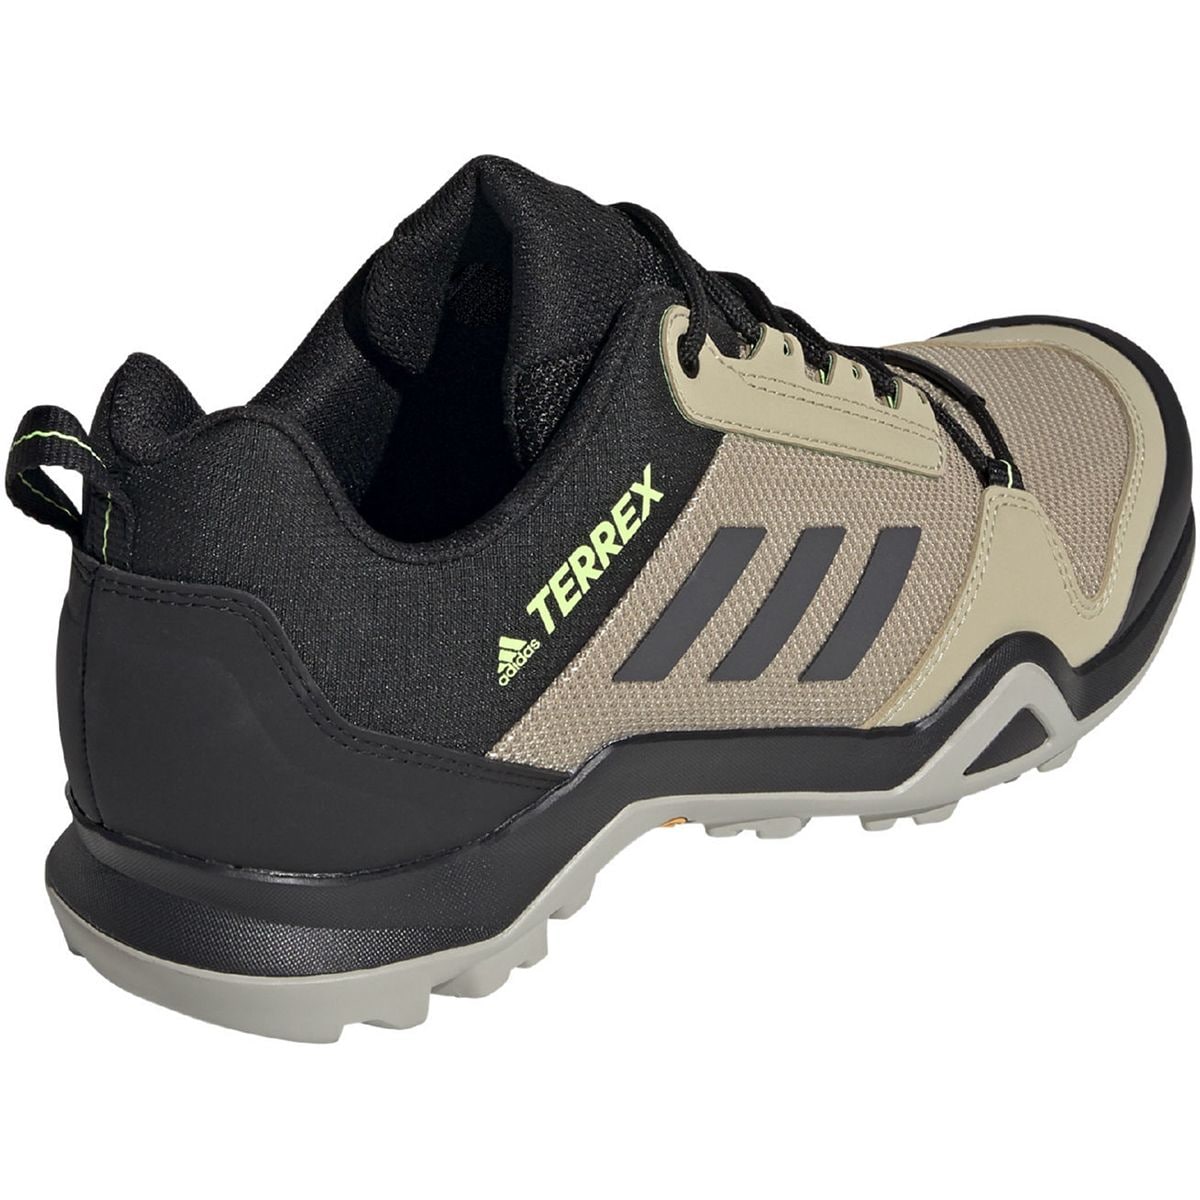 adidas performance terrex ax3 hiking shoes